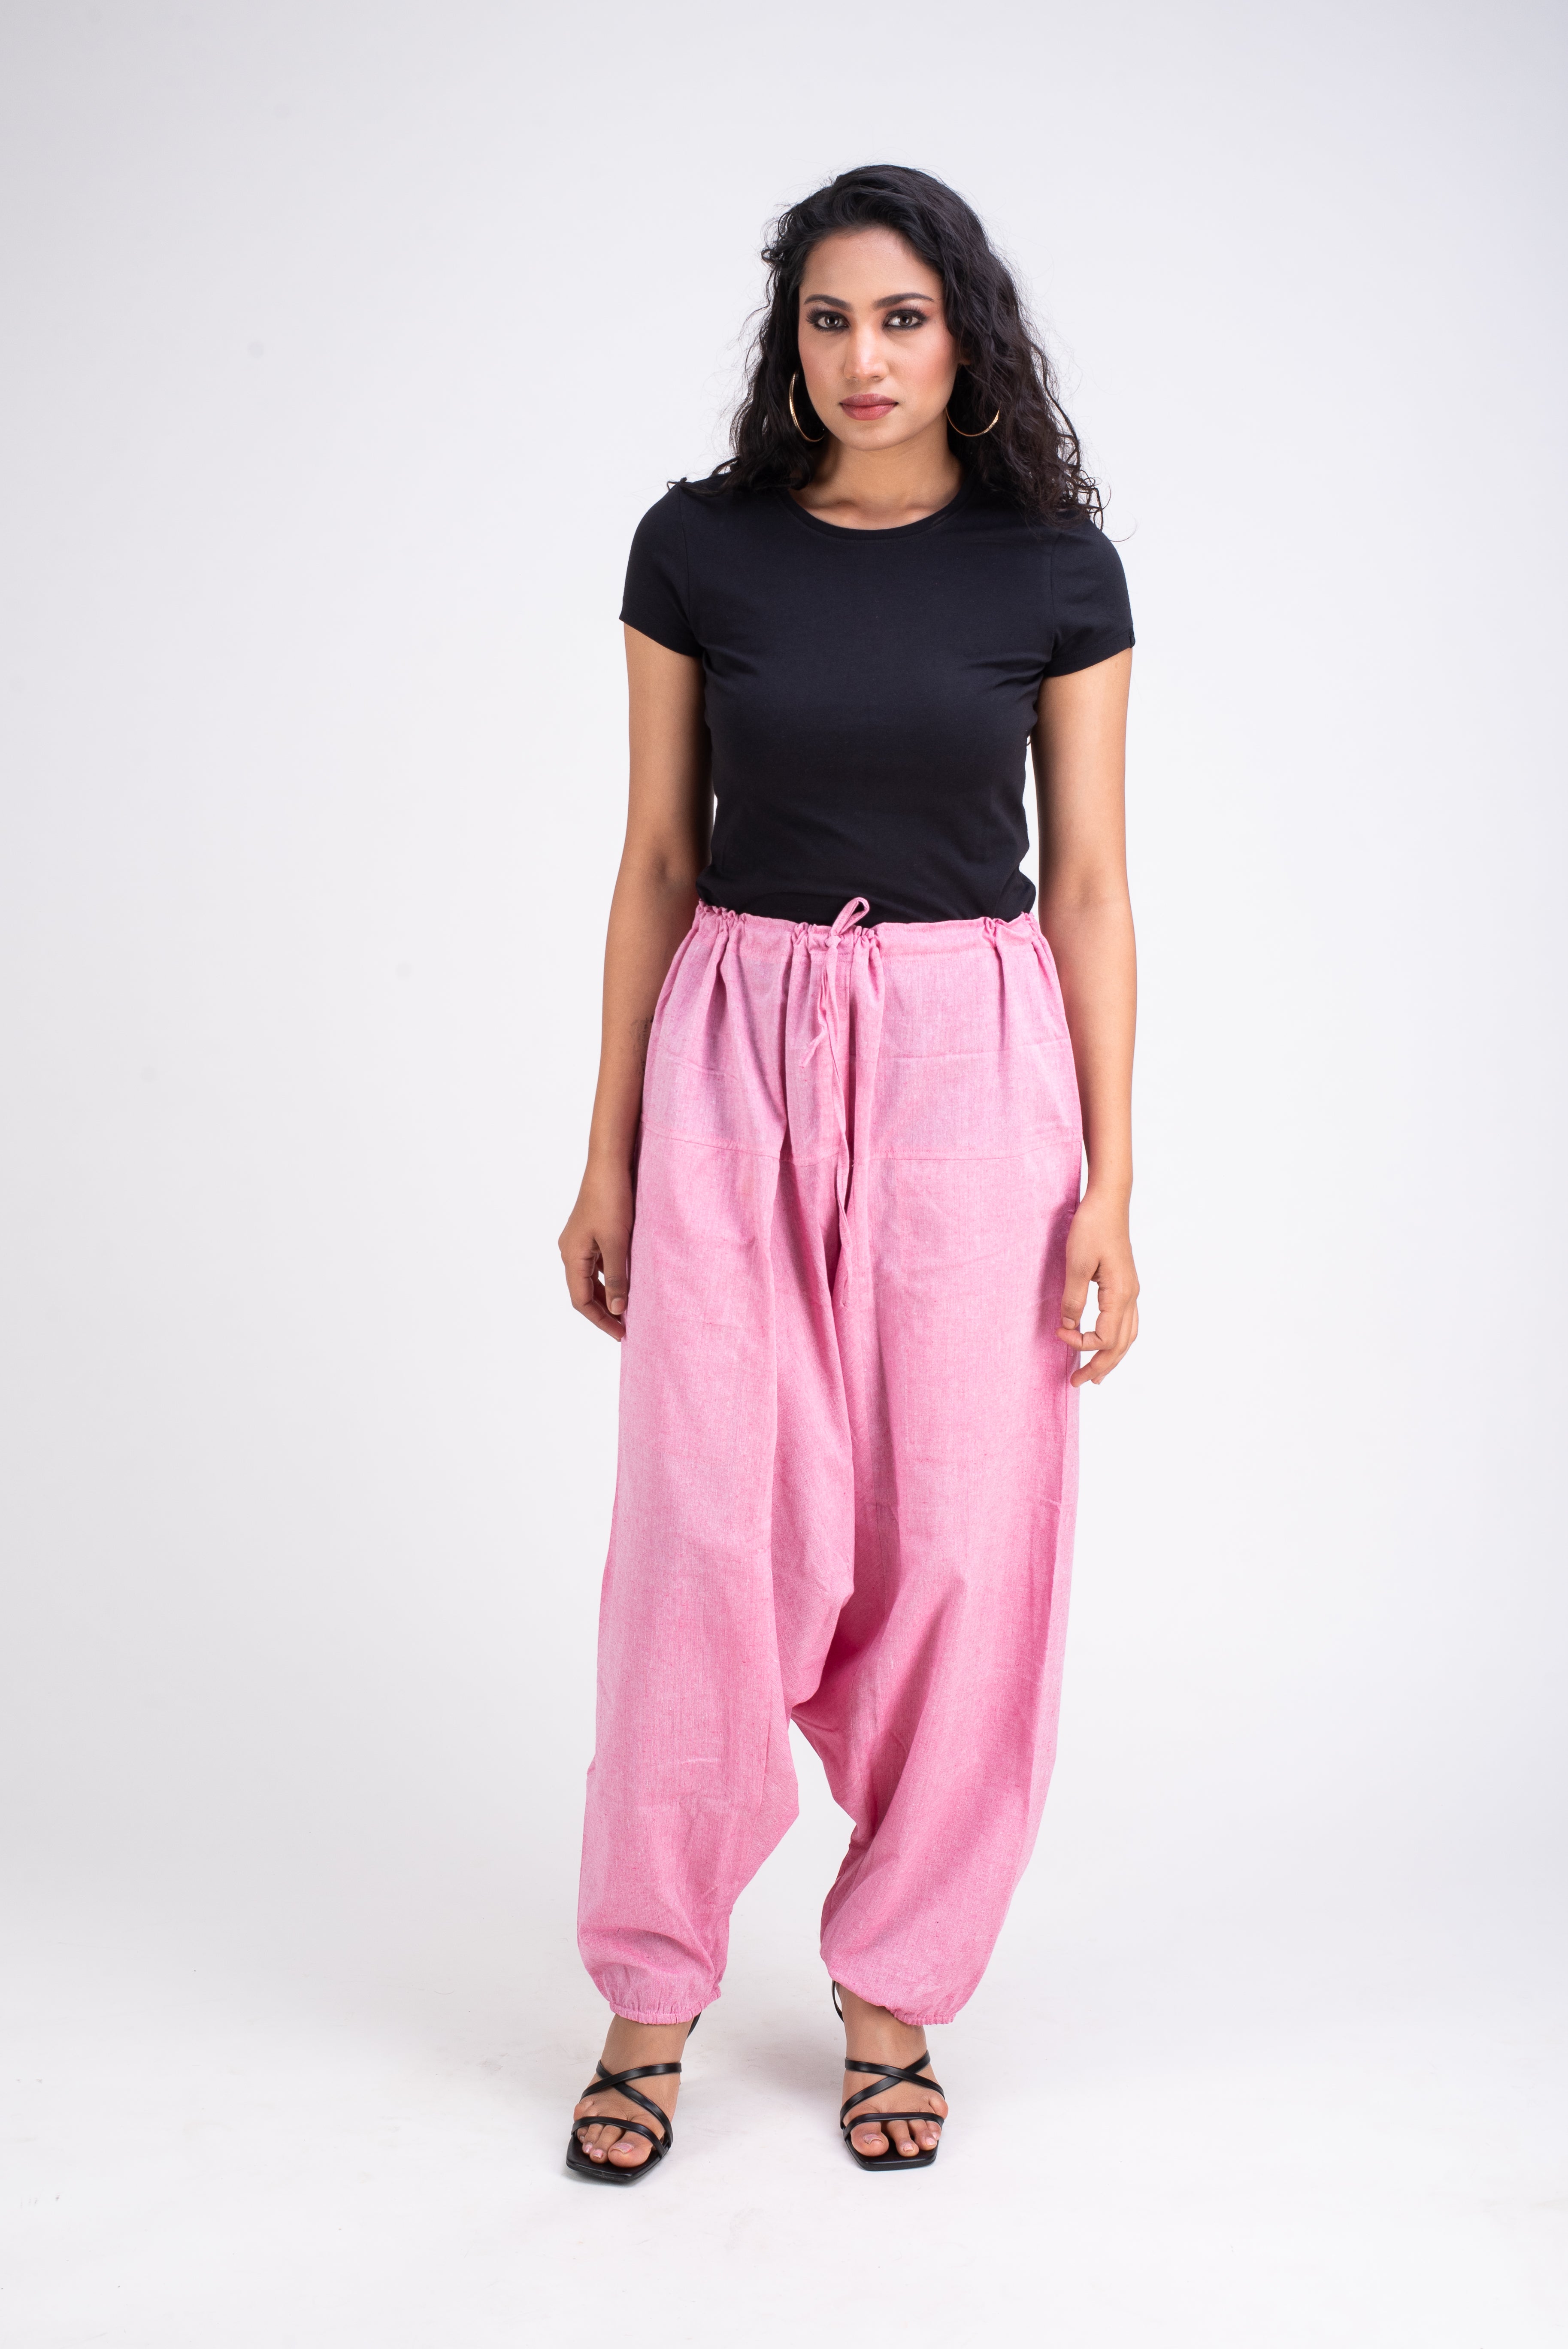 582-Pink Whitelotus Women's Pants"Yoga pants"